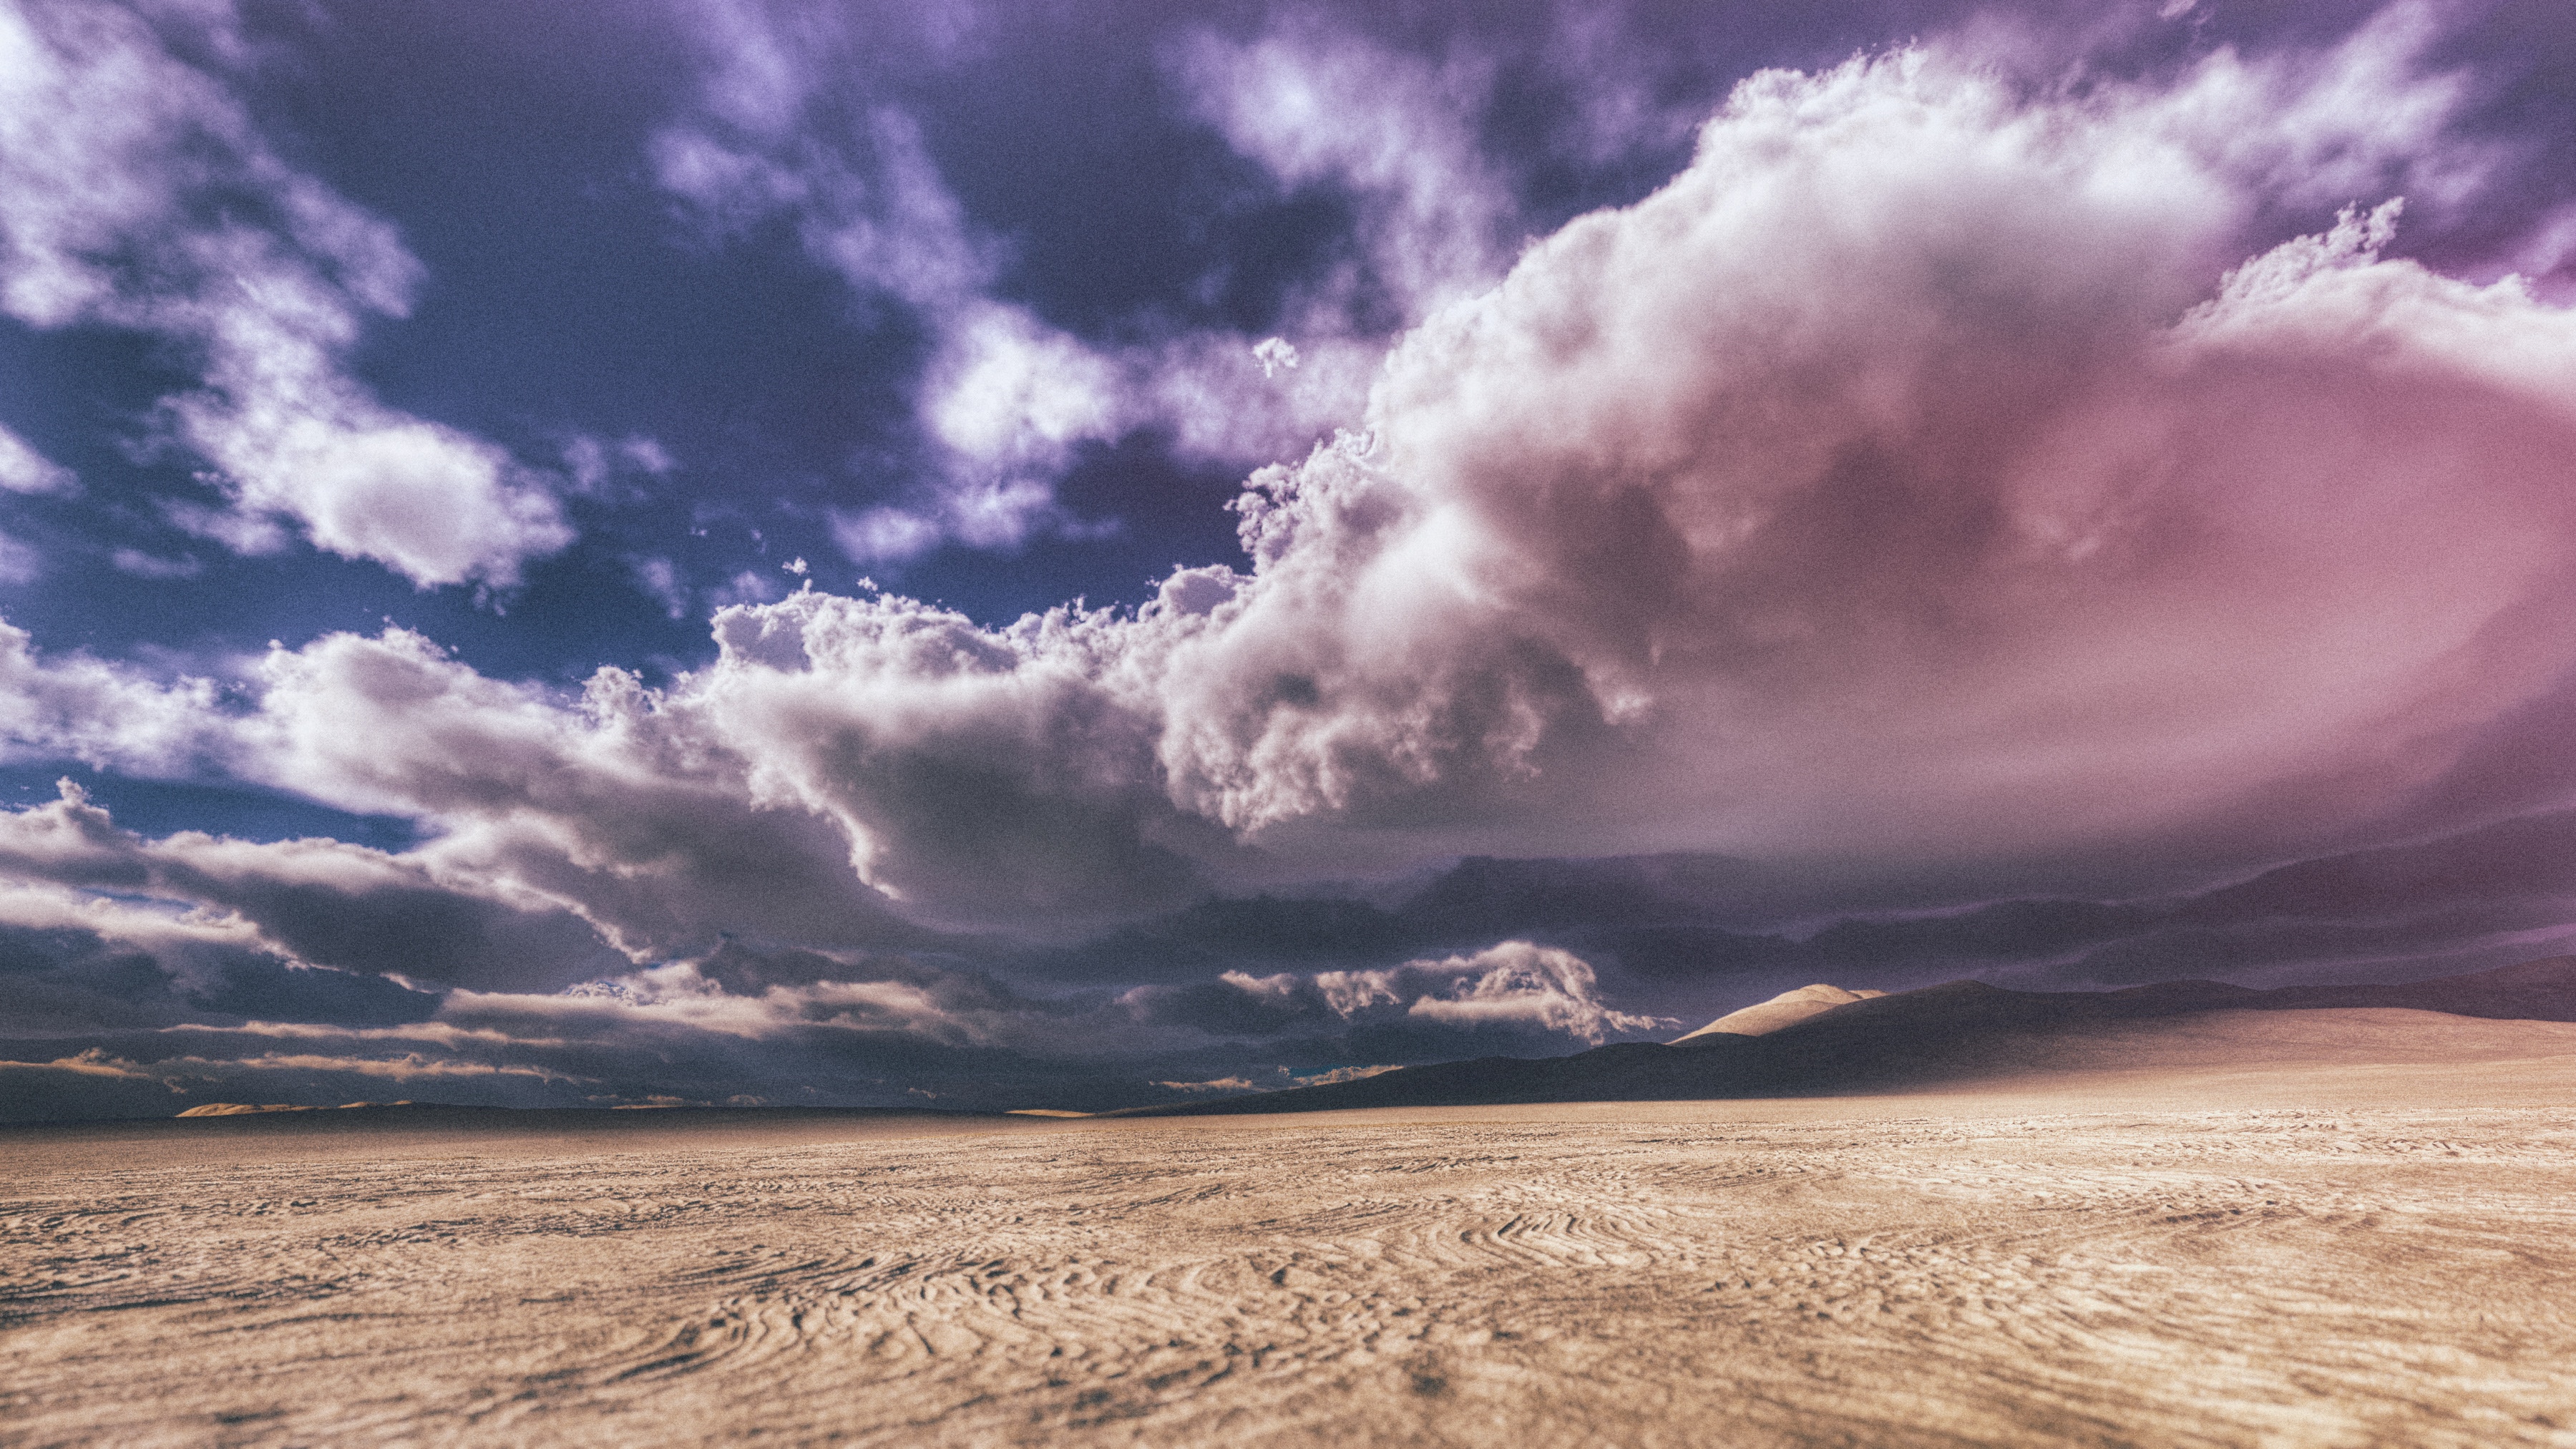 Purple clouds above a baron desert